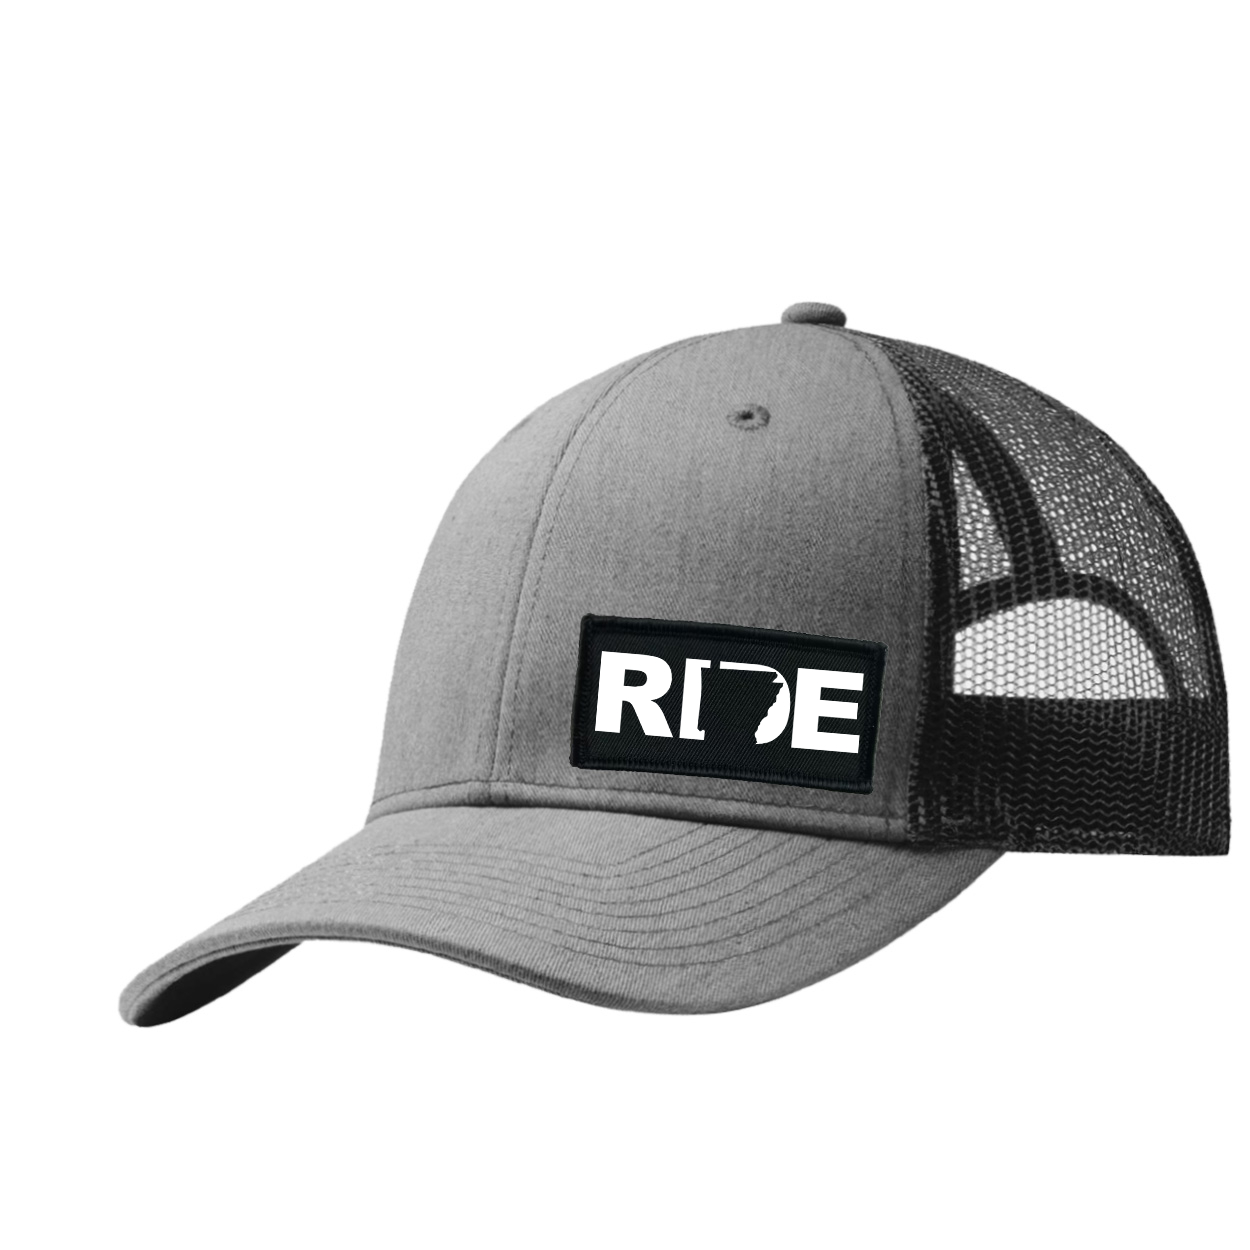 Ride Arkansas Night Out Woven Patch Snapback Trucker Hat Heather Gray/Black (White Logo)